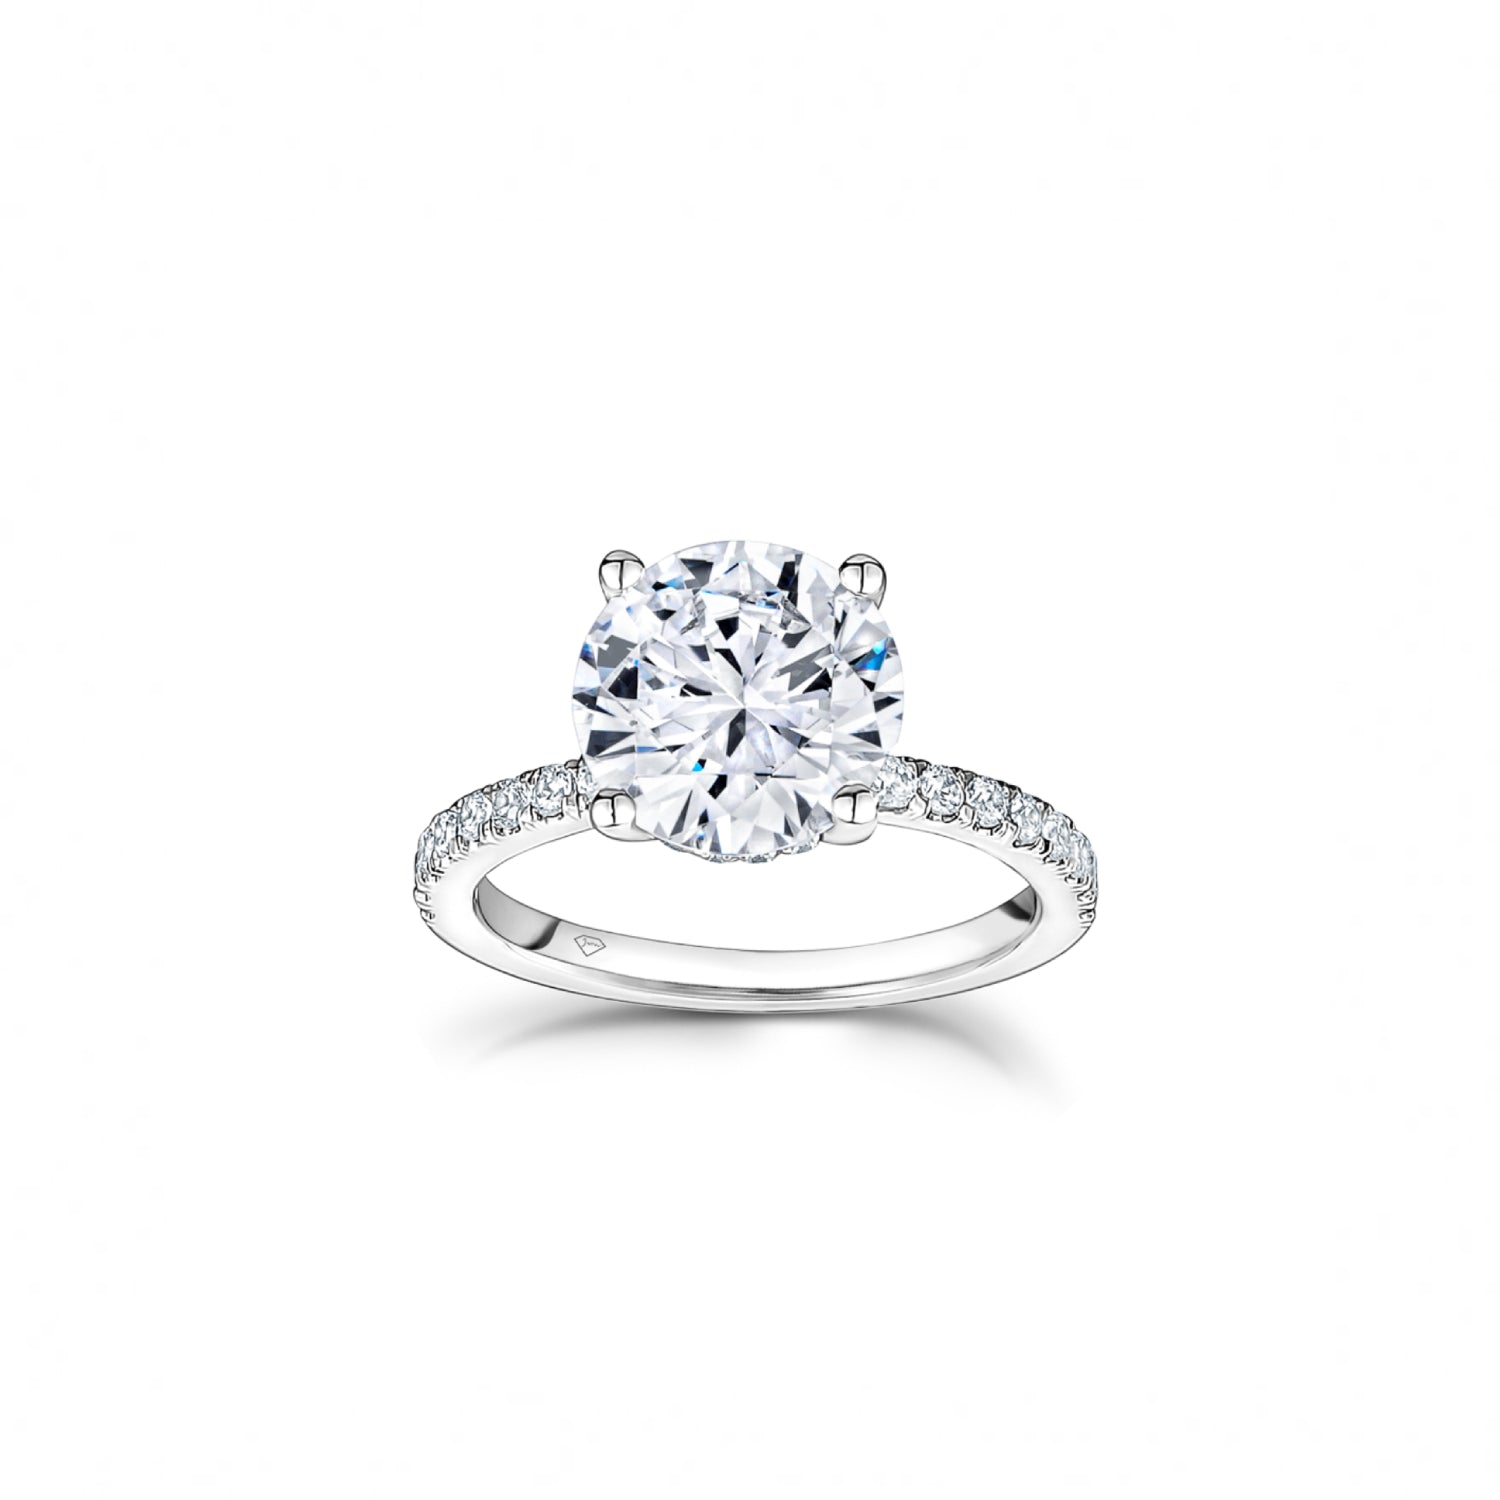 Round Brilliant Cut Diamond Hidden Halo Engagement Ring in White Gold